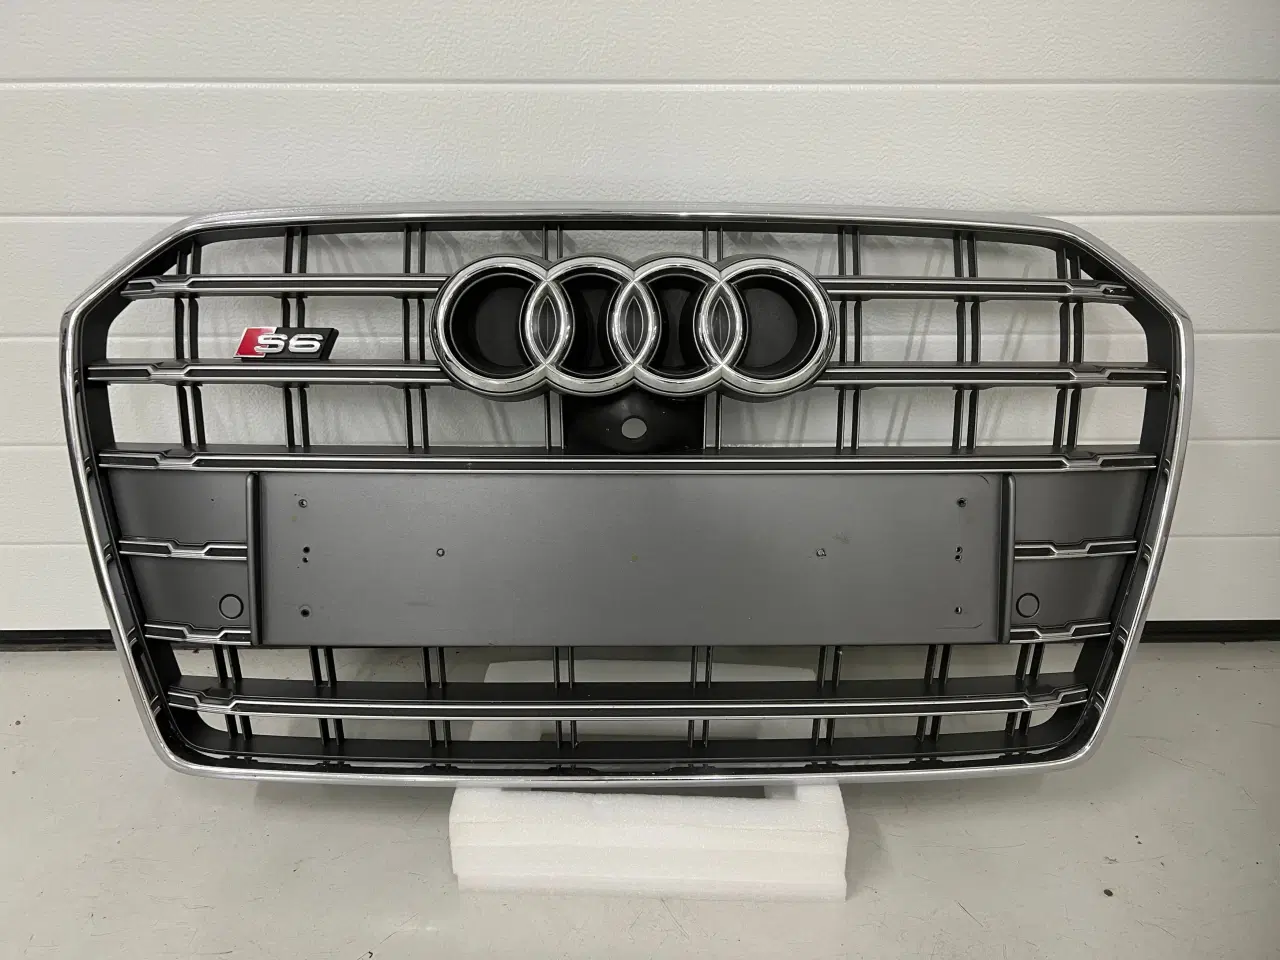 Billede 1 - Audi S6 grill